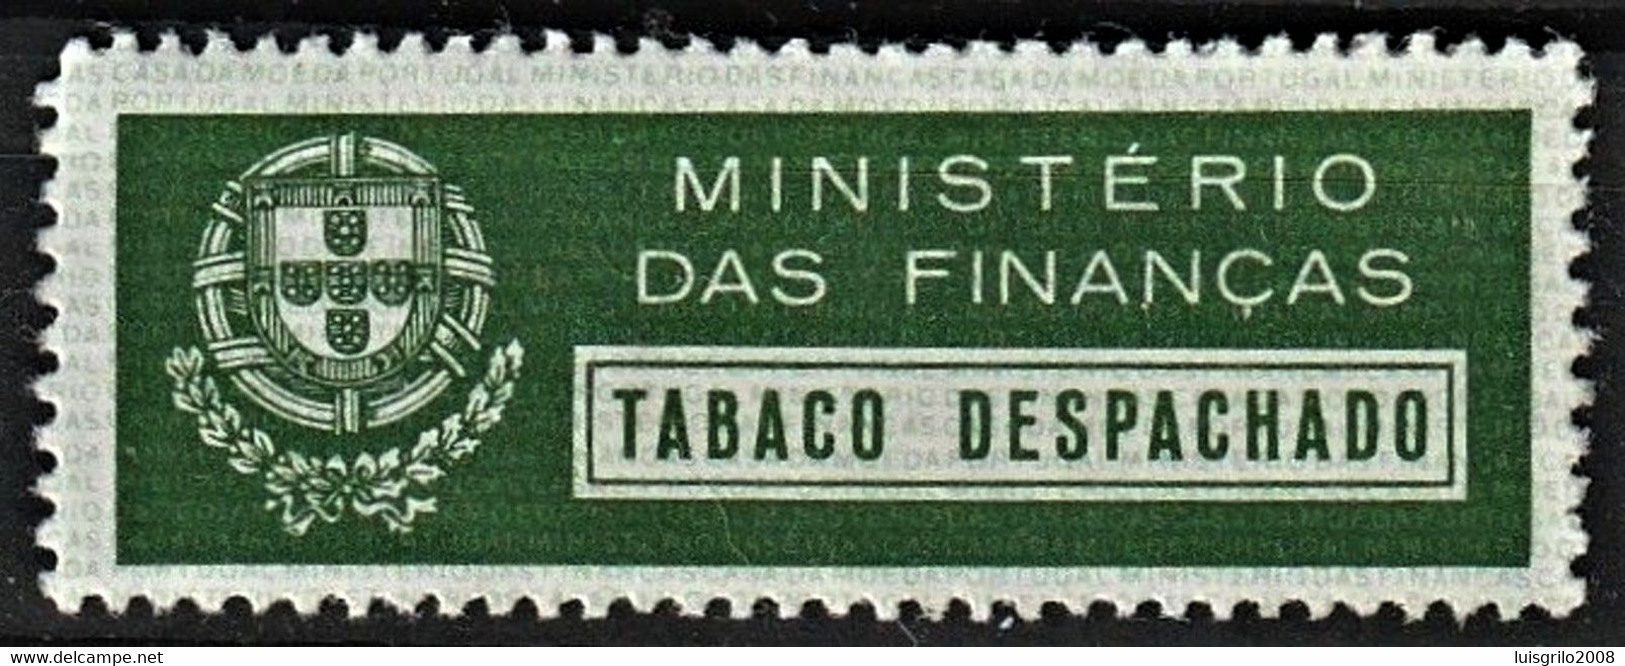 Fiscal/ Revenue, Portugal - Tabac/ Tobacco Tax, Imposto Sobre Tabaco - |- 1948, Tabaco Despachado - Novo, MNH** - Ungebraucht